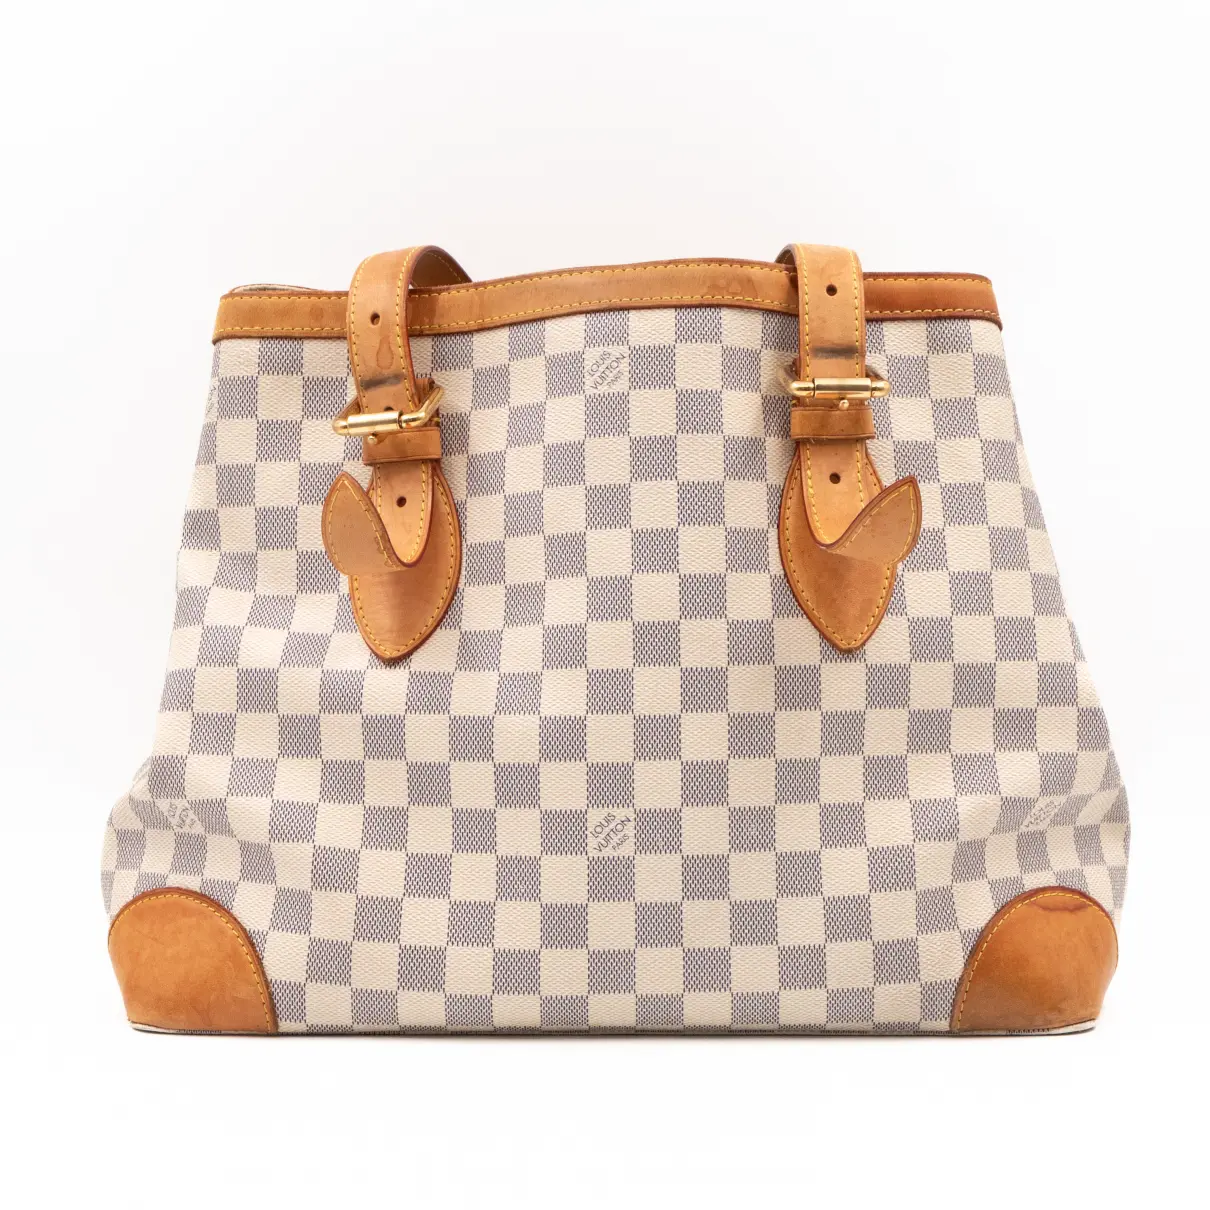 Buy Louis Vuitton Hampstead leather handbag online